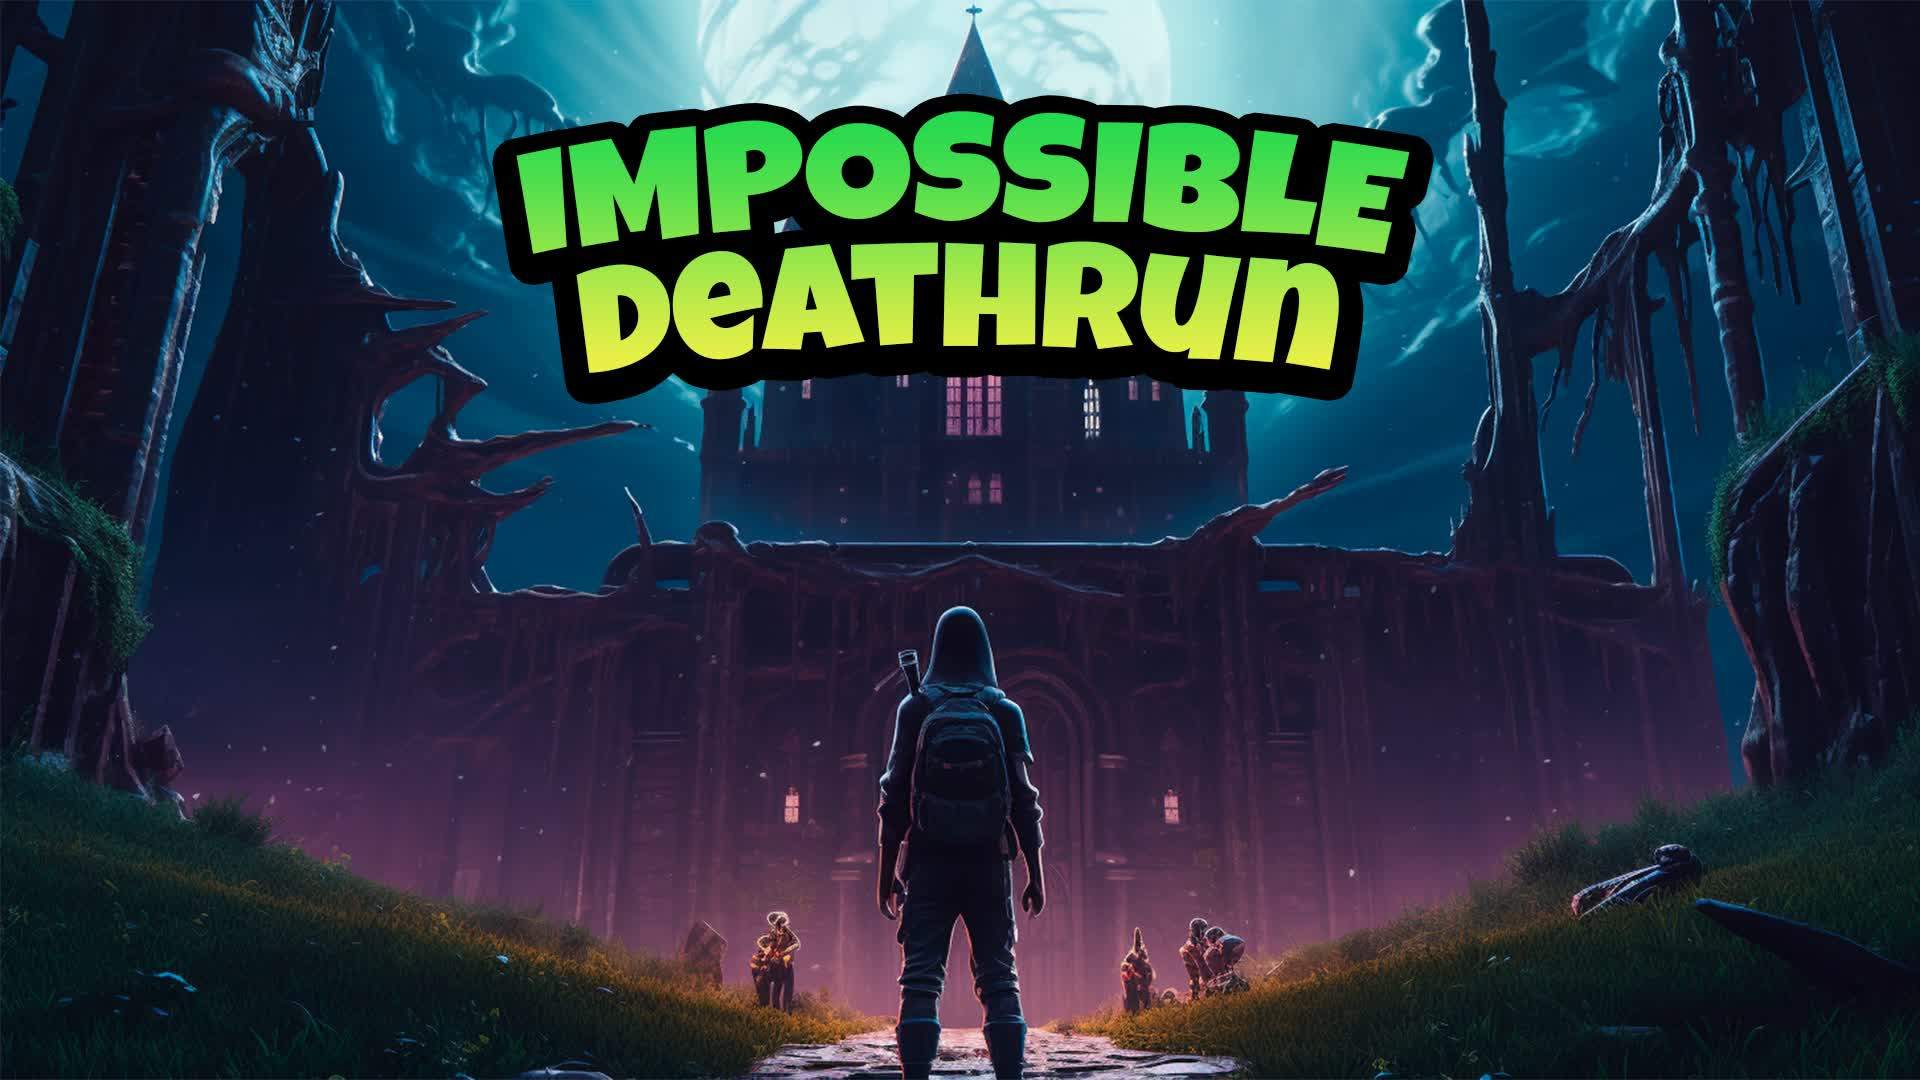 Impossible Deathrun